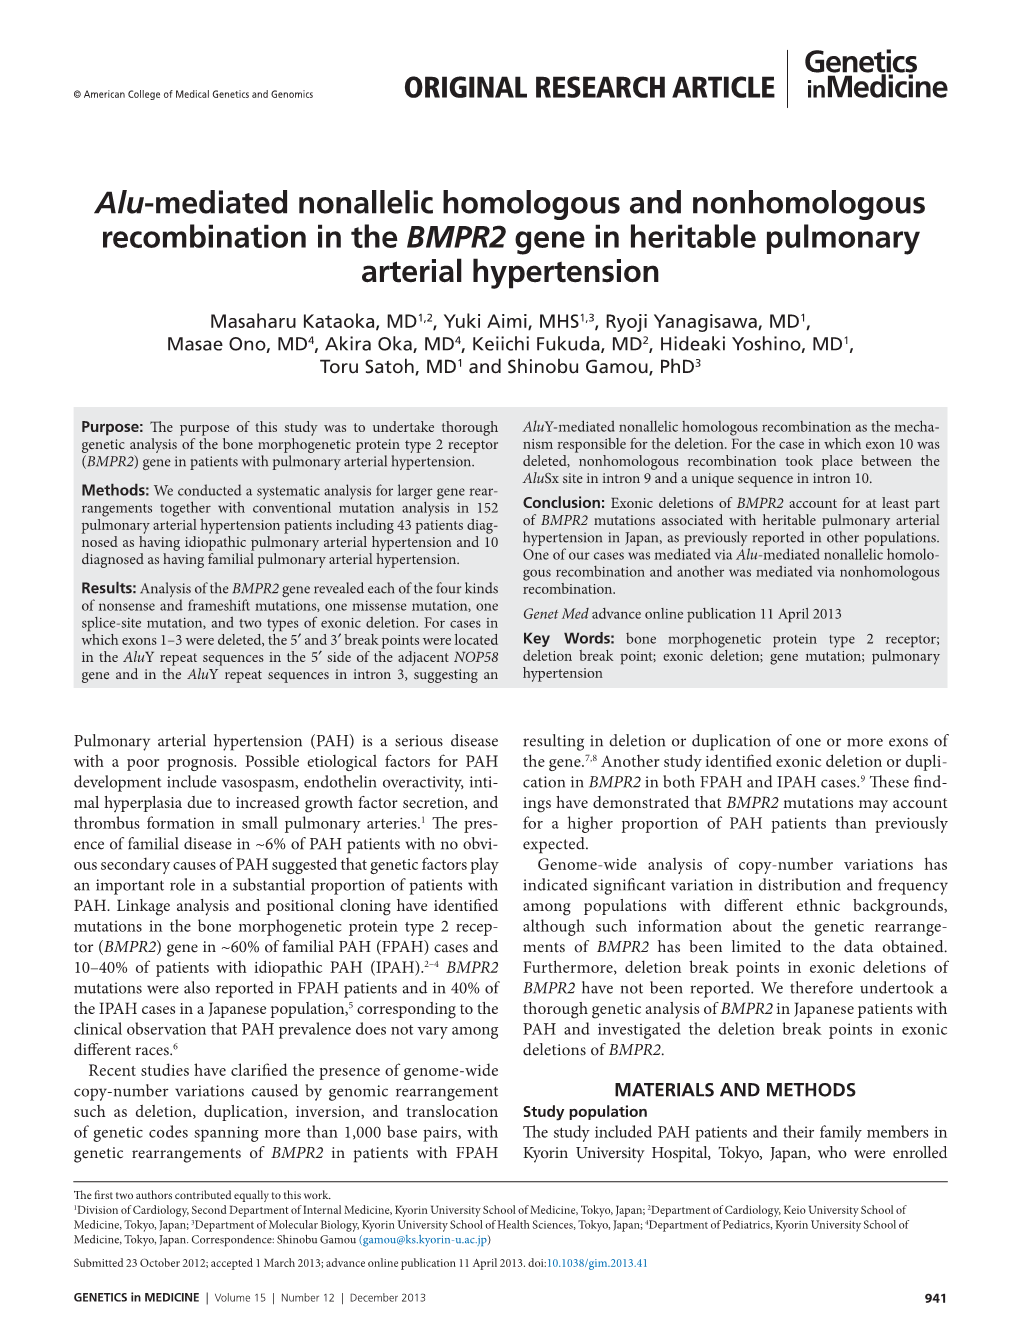 Alu-Mediated Nonallelic Homologous and Nonhomologous Recombination in the BMPR2 Gene in Heritable Pulmonary Arterial Hypertension